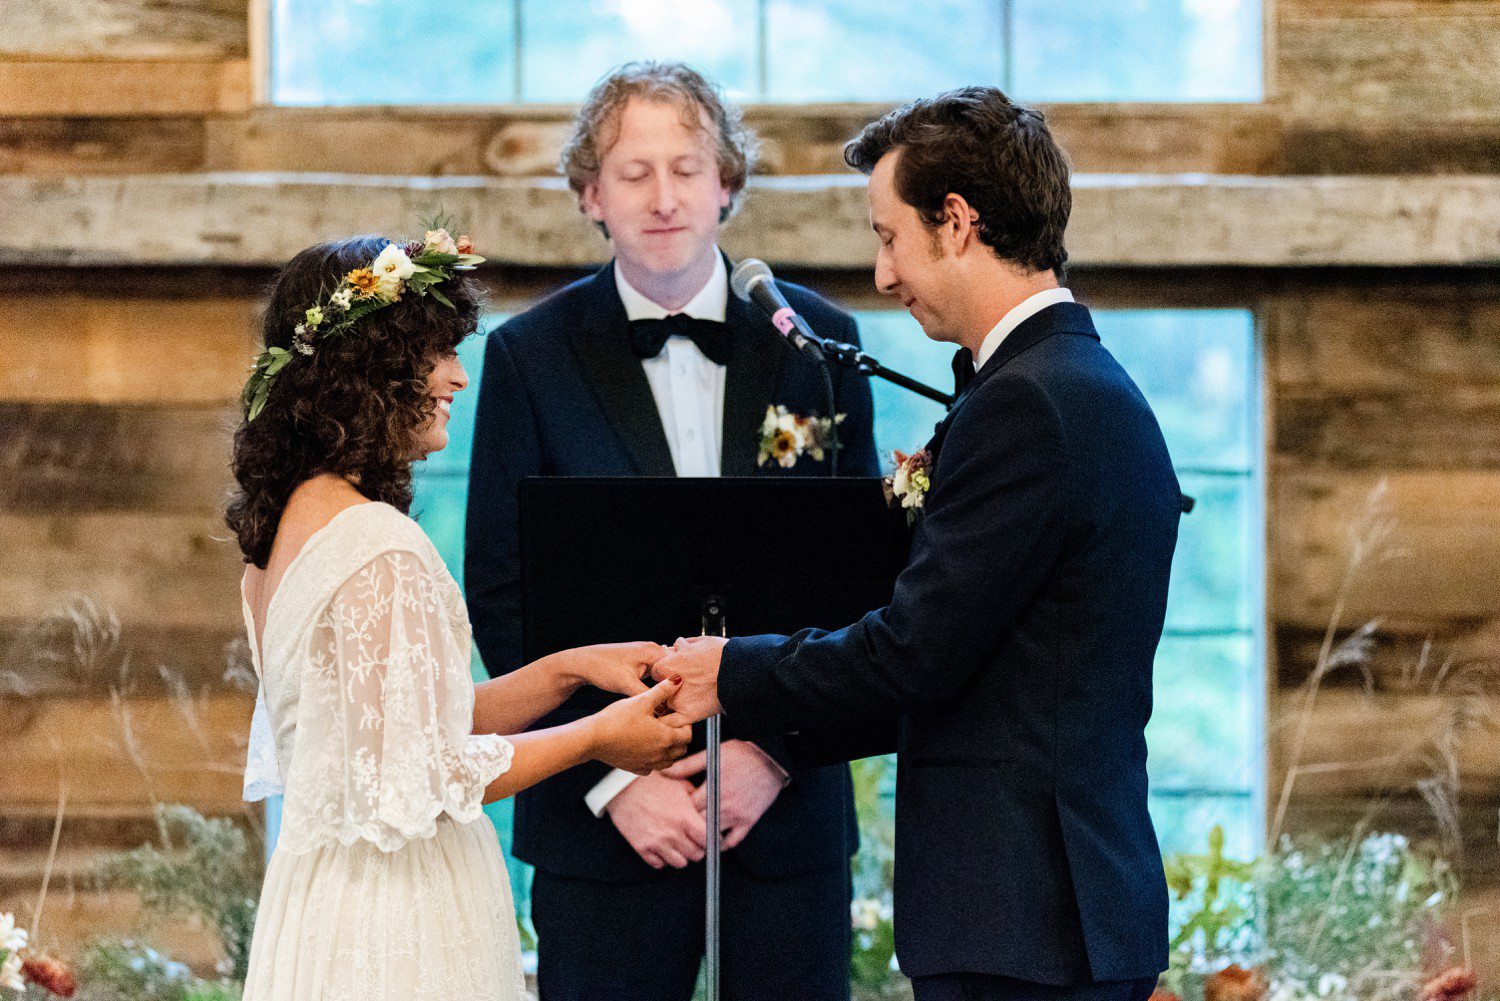 Ring exchange during wedding ceremony